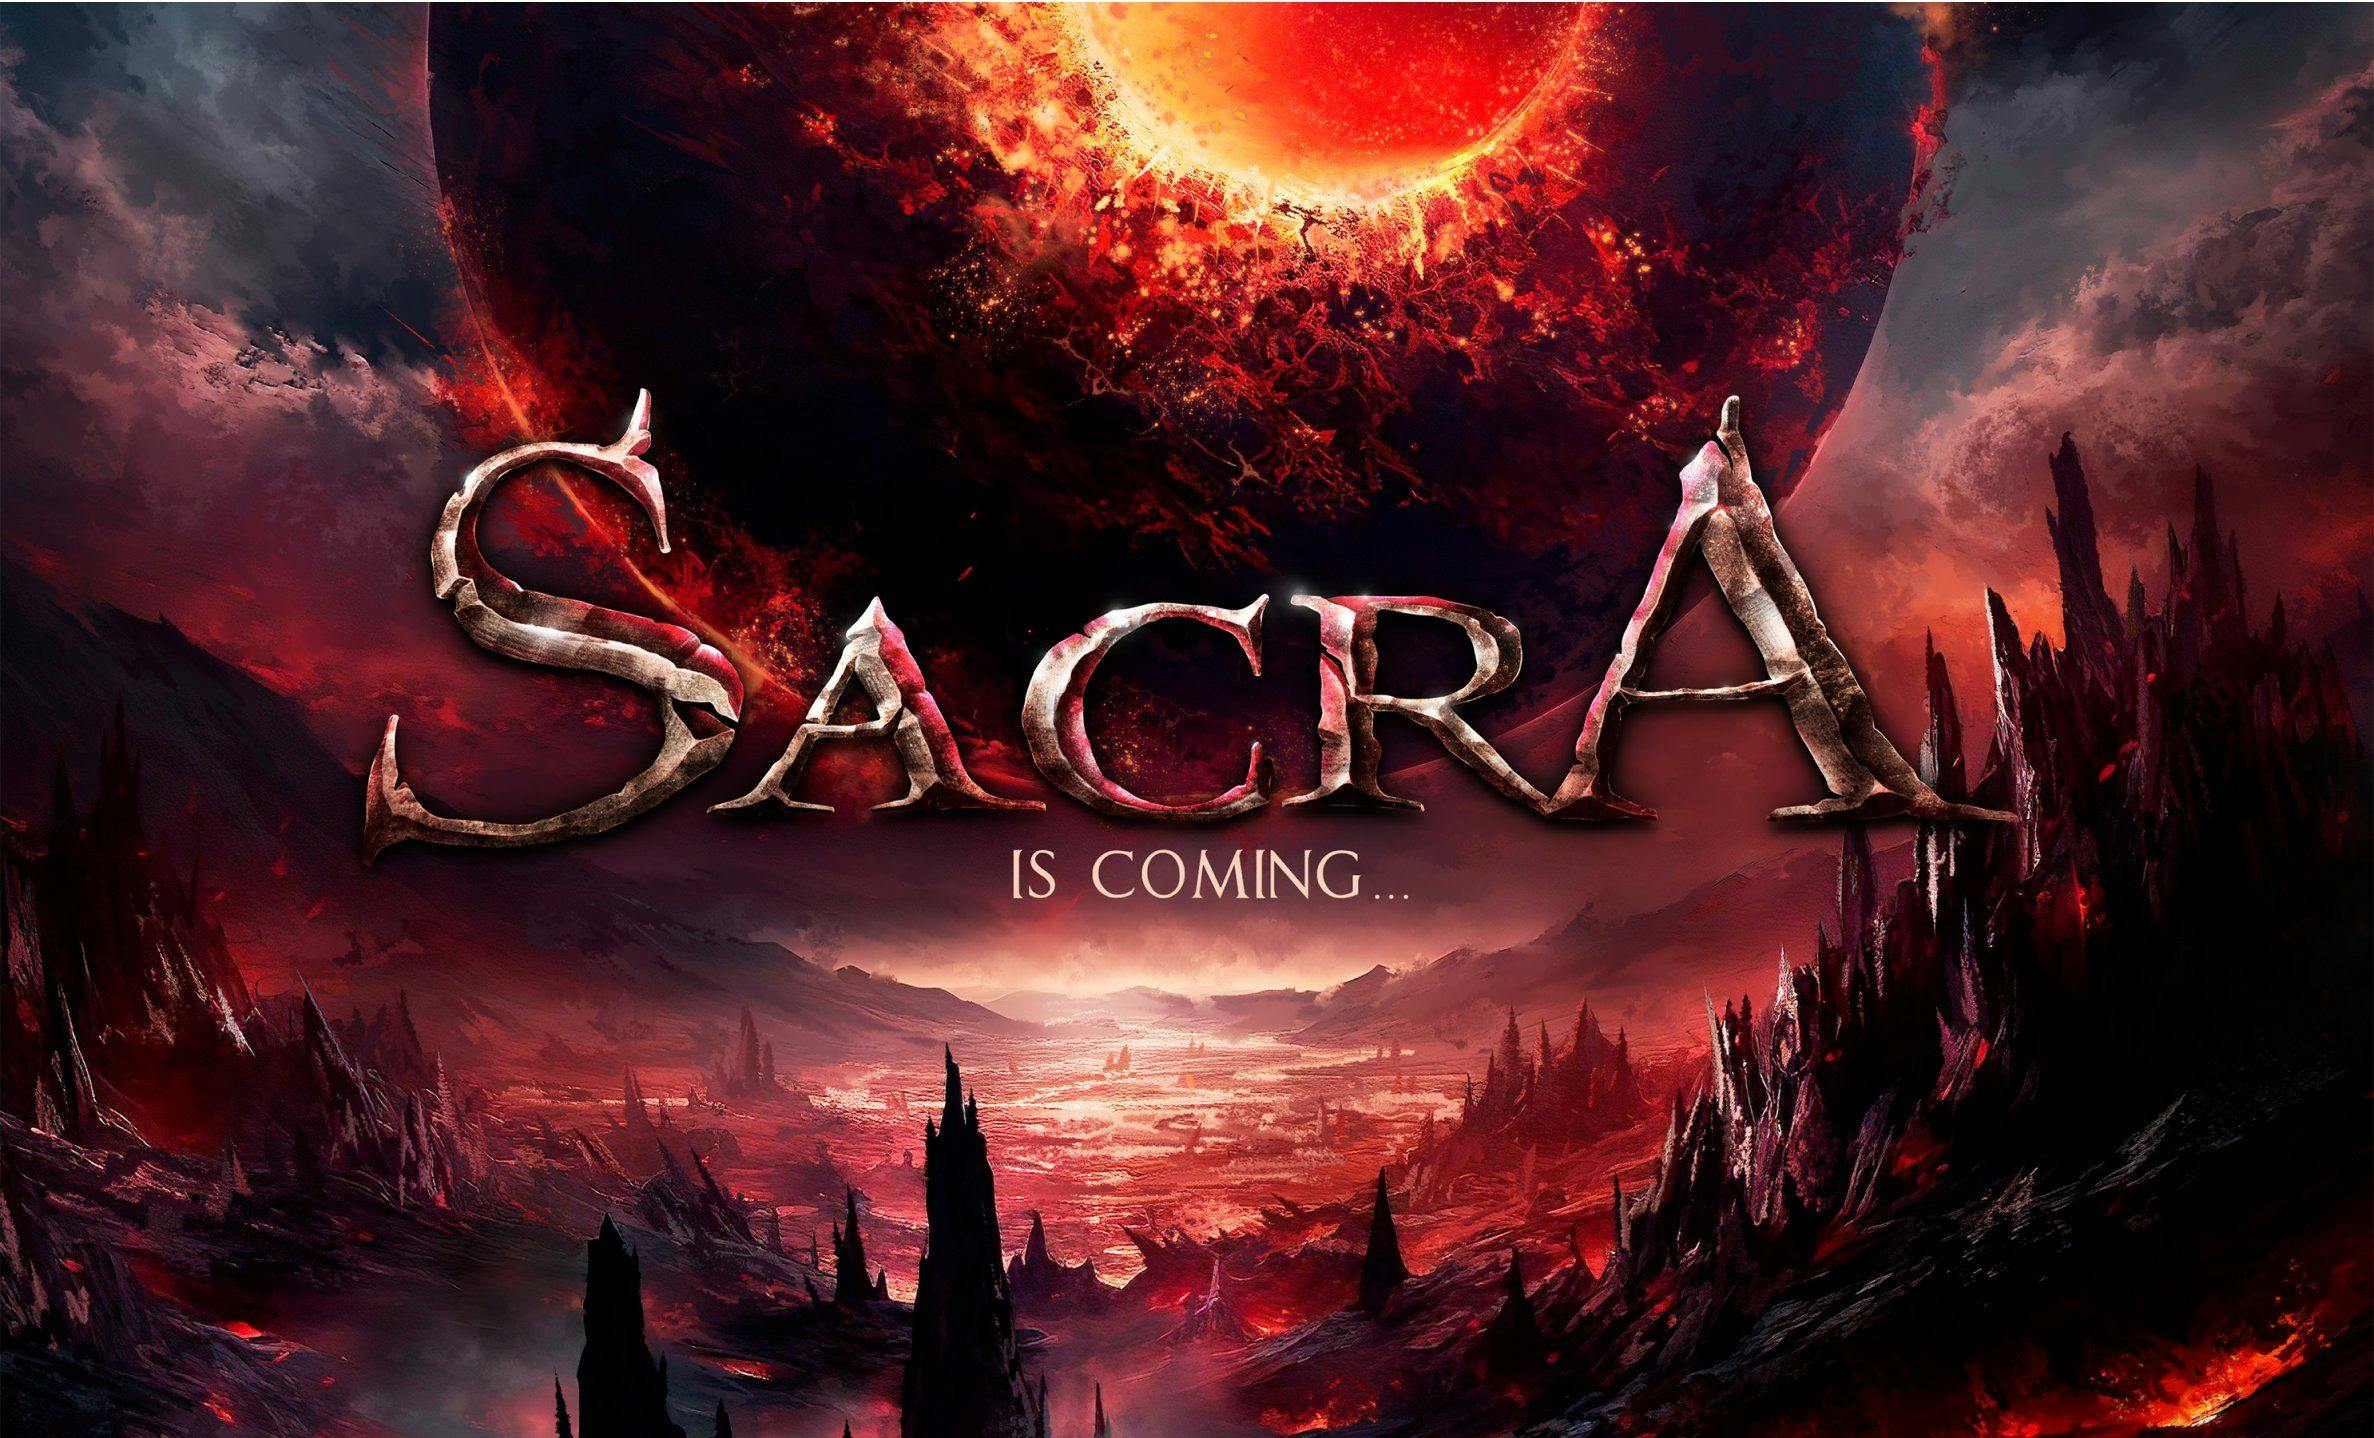 SACRA game image 1.jpg